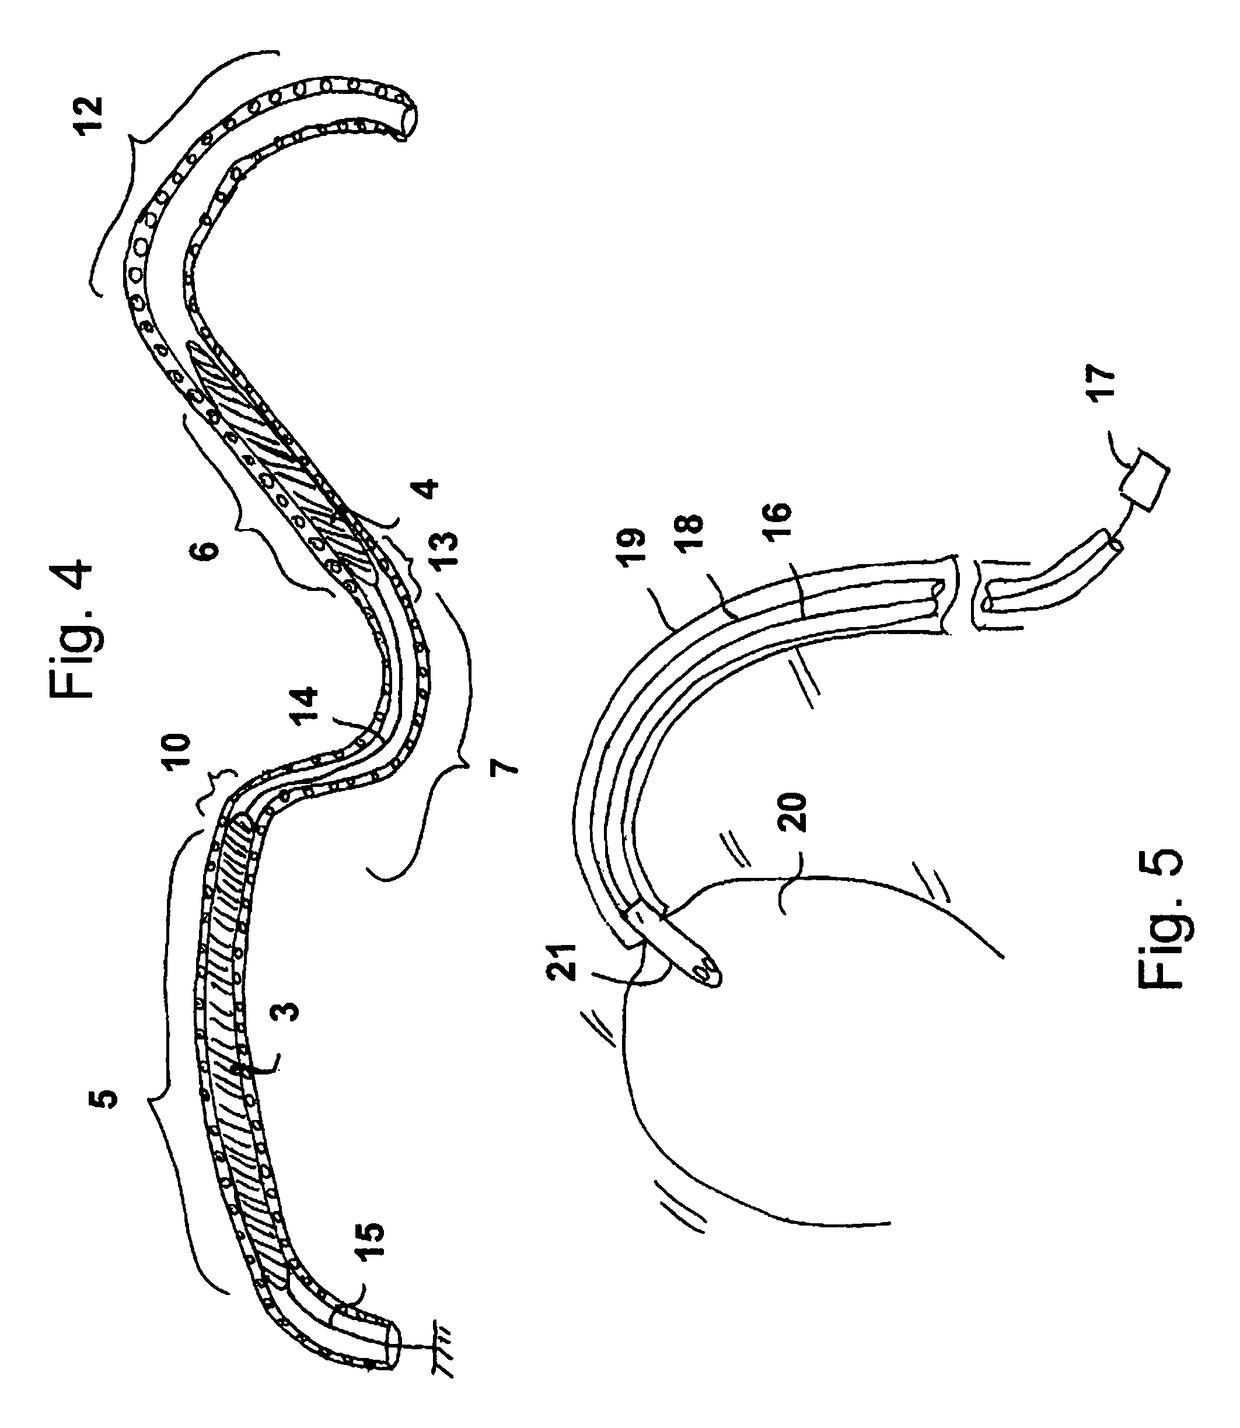 Catheter pump arrangement and flexible shaft arrangement having a core